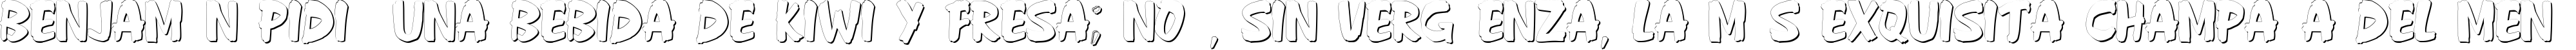 Пример написания шрифтом Anderson Fireball XL5 Shadow текста на испанском